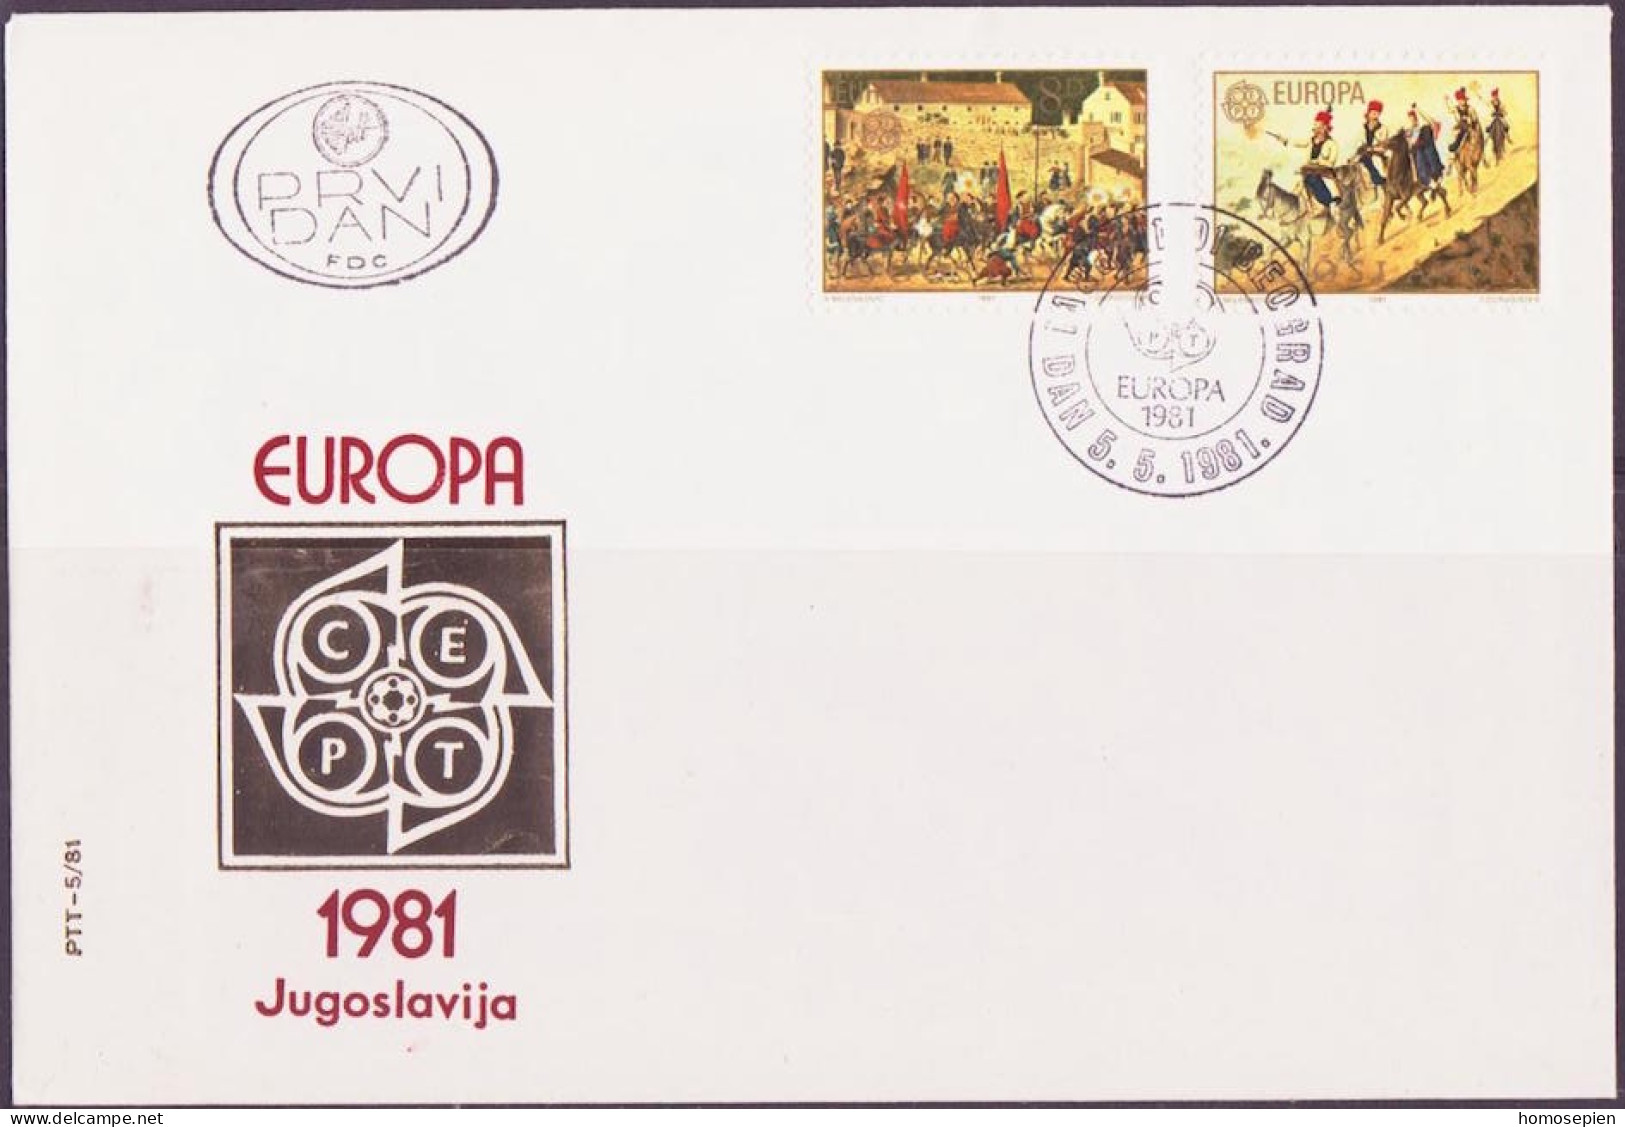 Yougoslavie - Jugoslawien - Yugoslavia FDC1 1981 Y&T N°1769 à 1770 - Michel N°1883 à 1884 - FDC